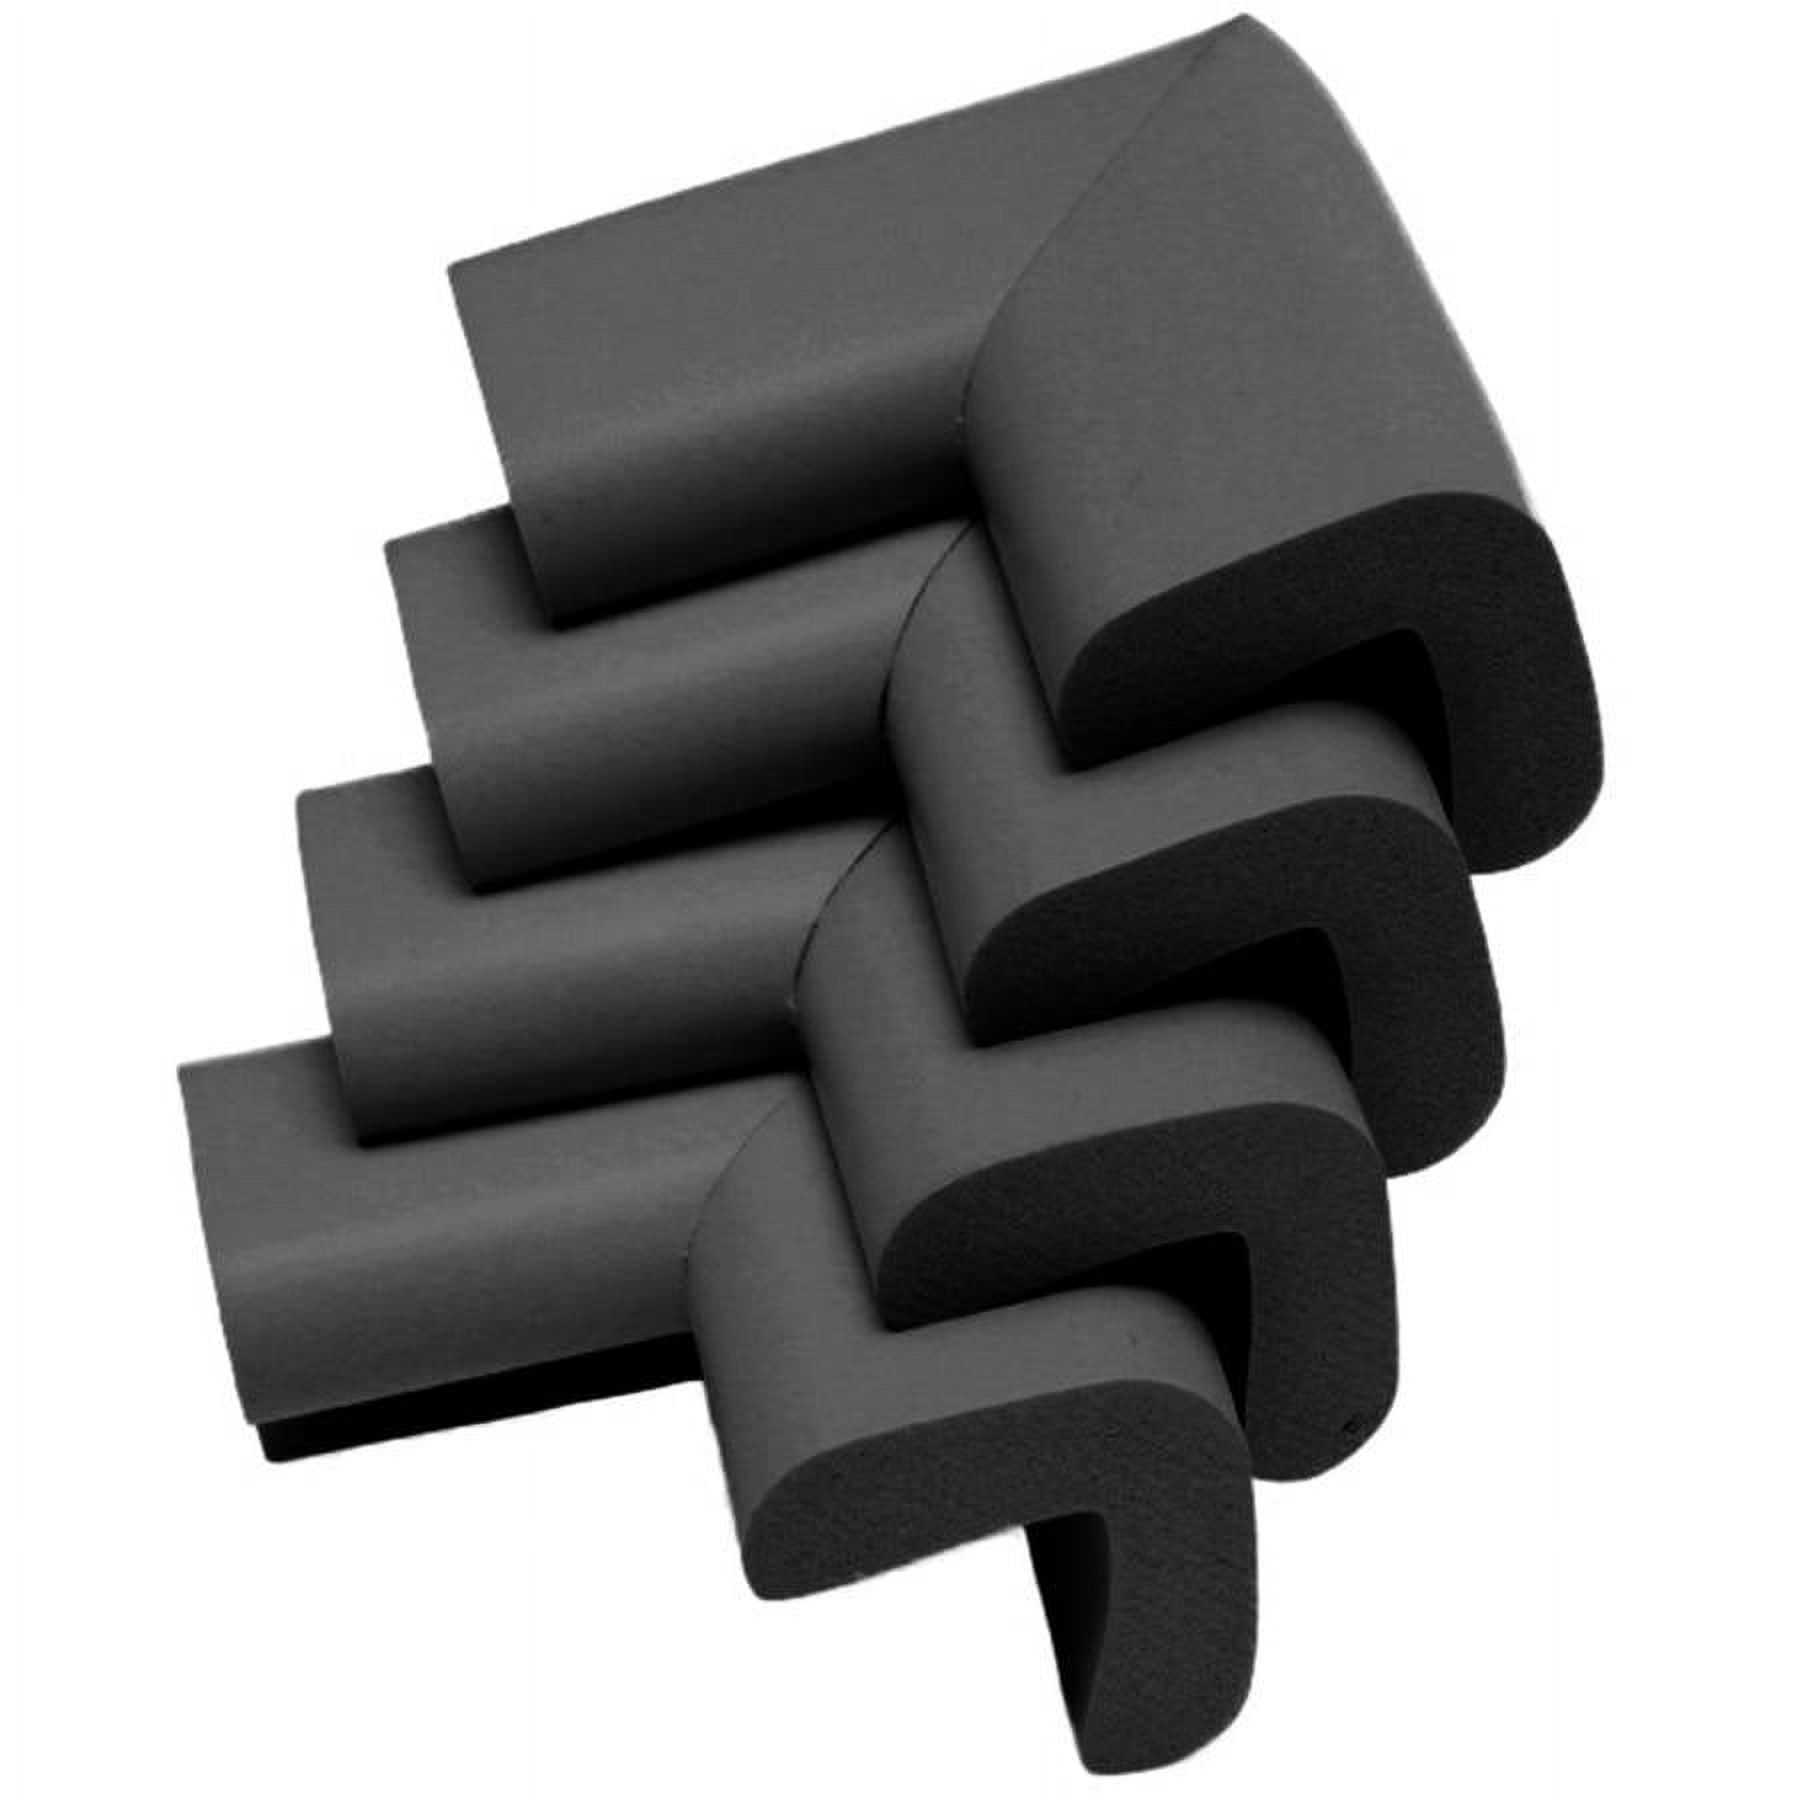 KidKusion Corner Cushions Foam, Black - image 3 of 5